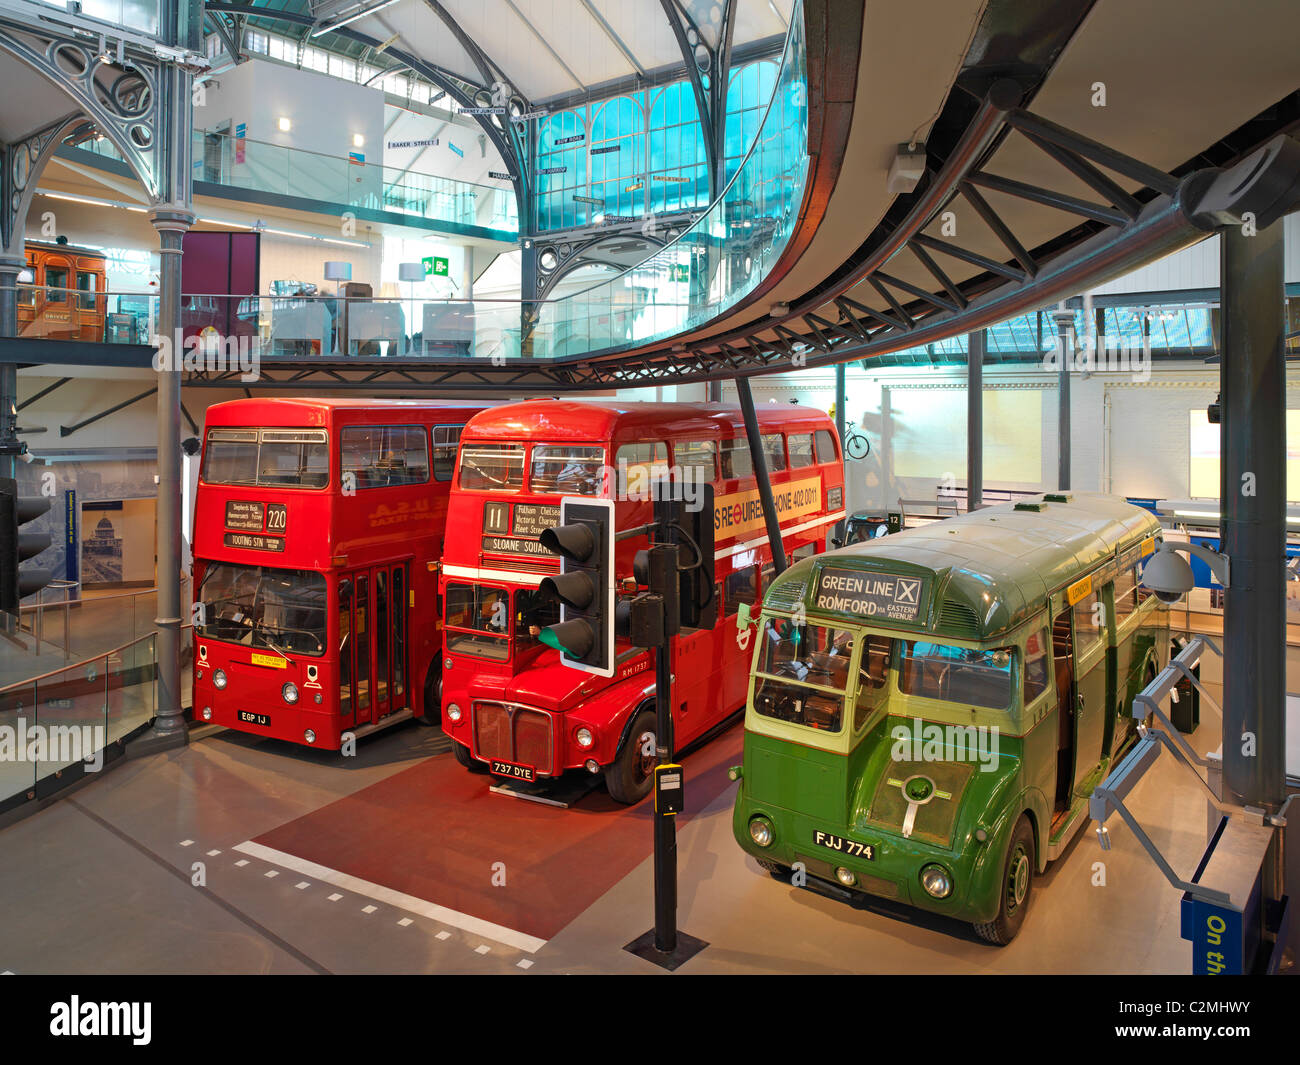 London transport Museum refurbishment, Covent Garden, London. Complete re-design and refurbishment of the London Transport Stock Photo